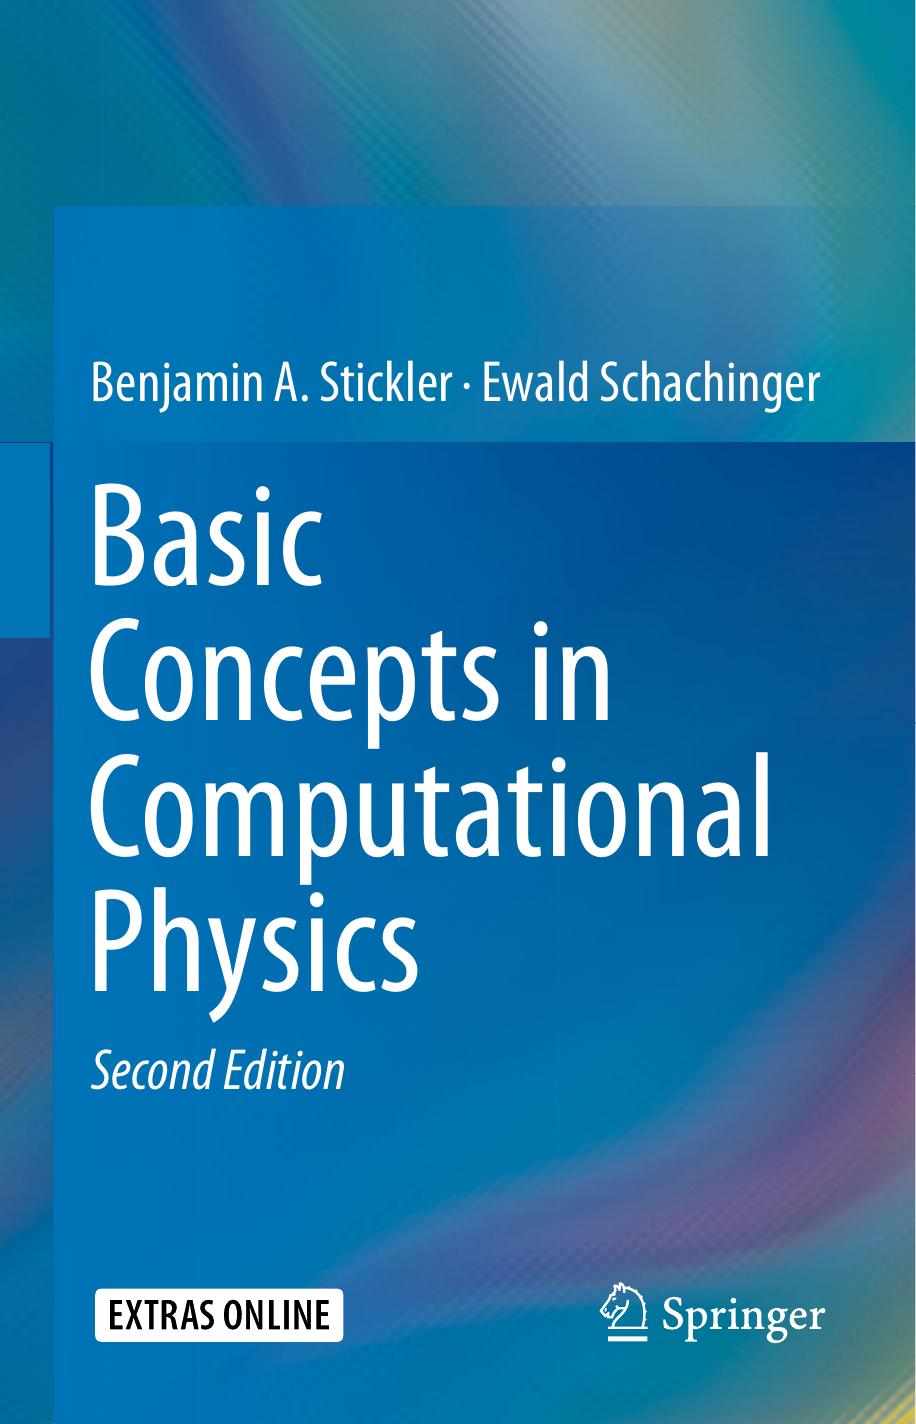 Basic Concepts in Computational Physics ( PDFDrive.com ) 2014,2016